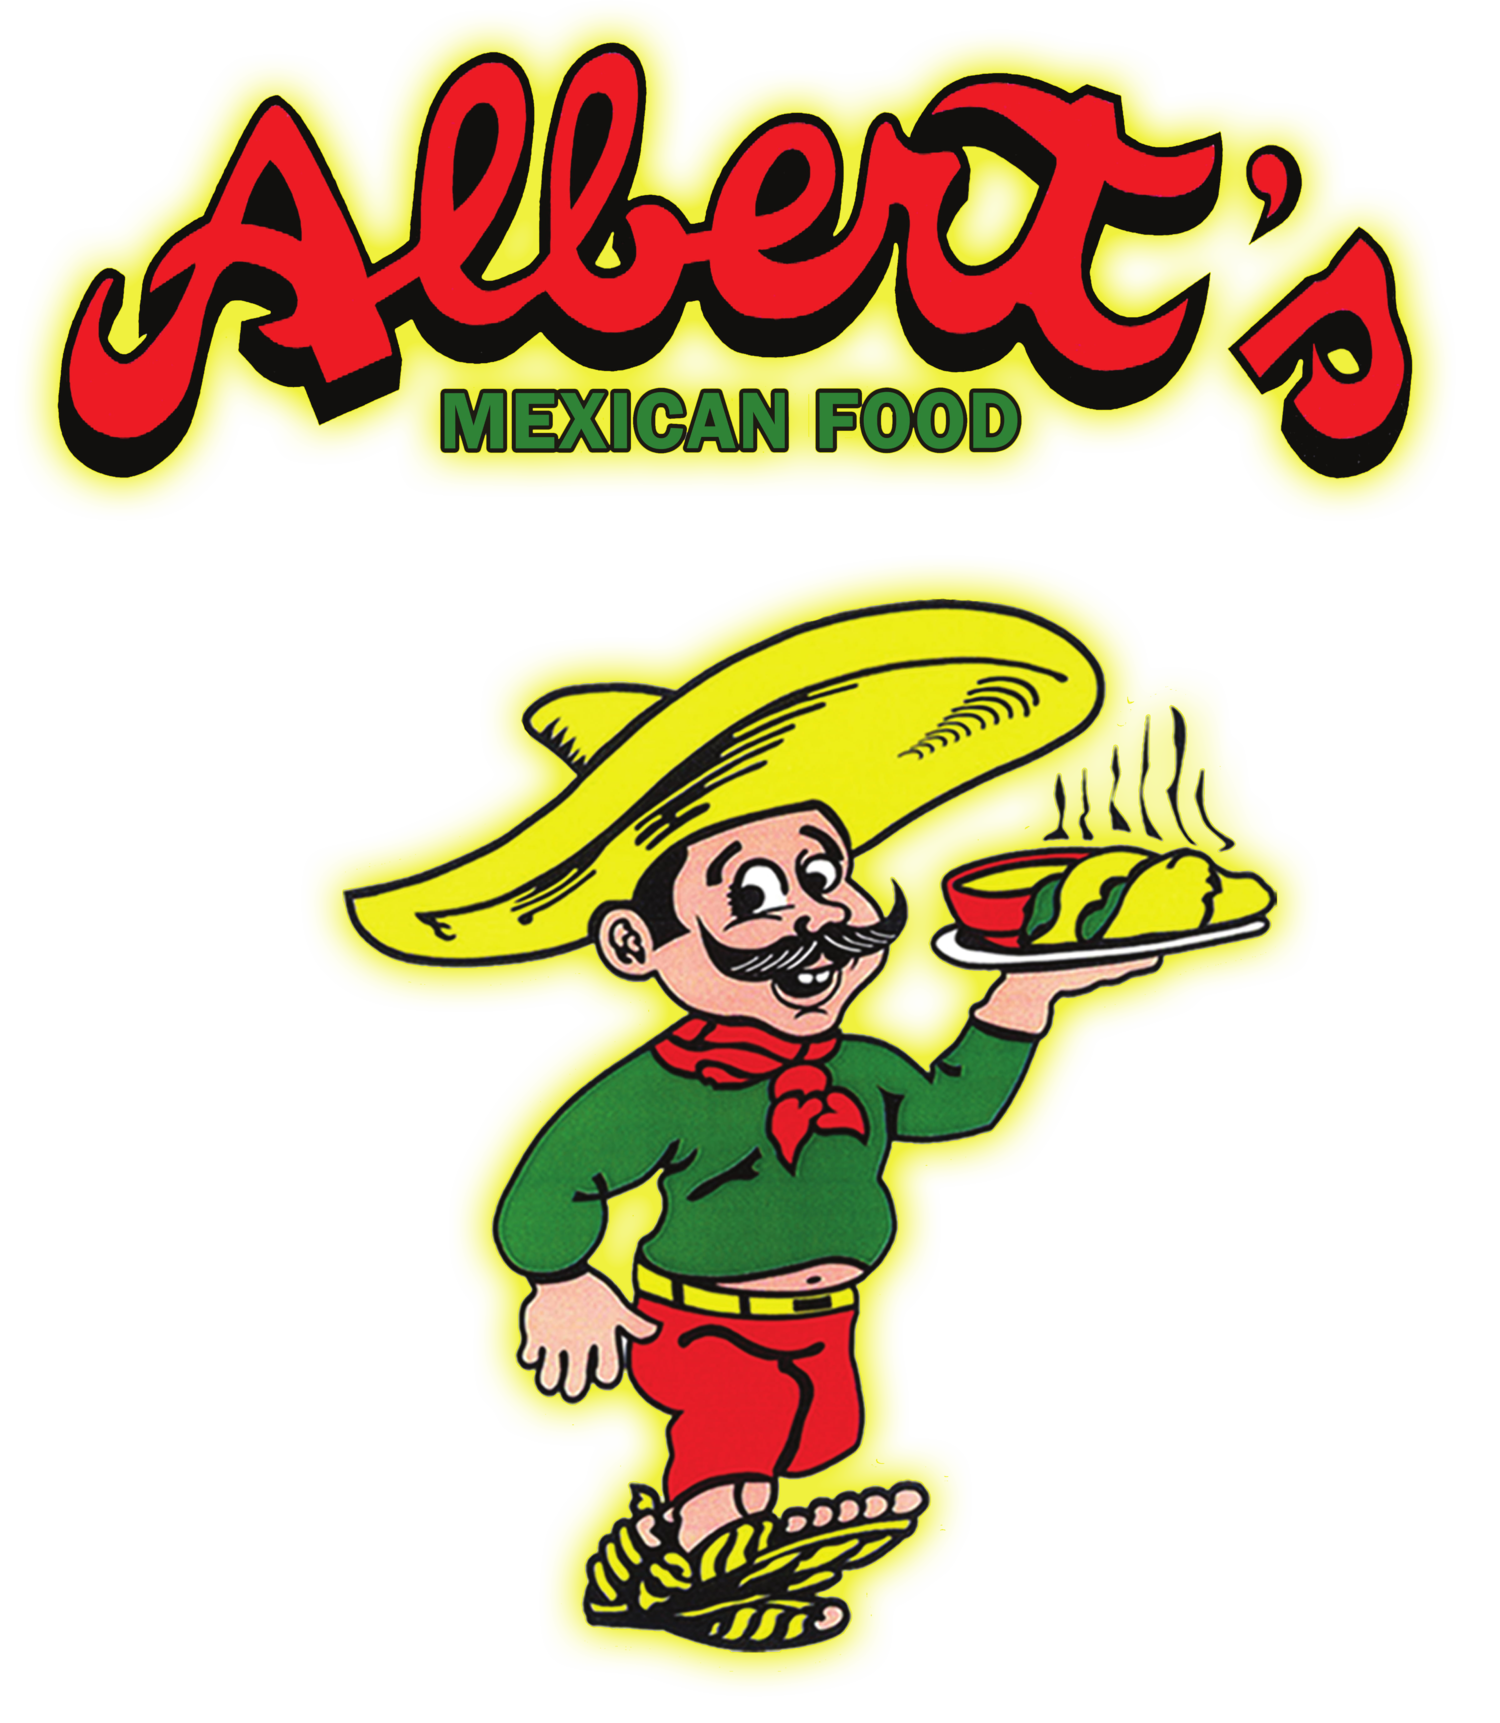 Albert's Mexican Food 